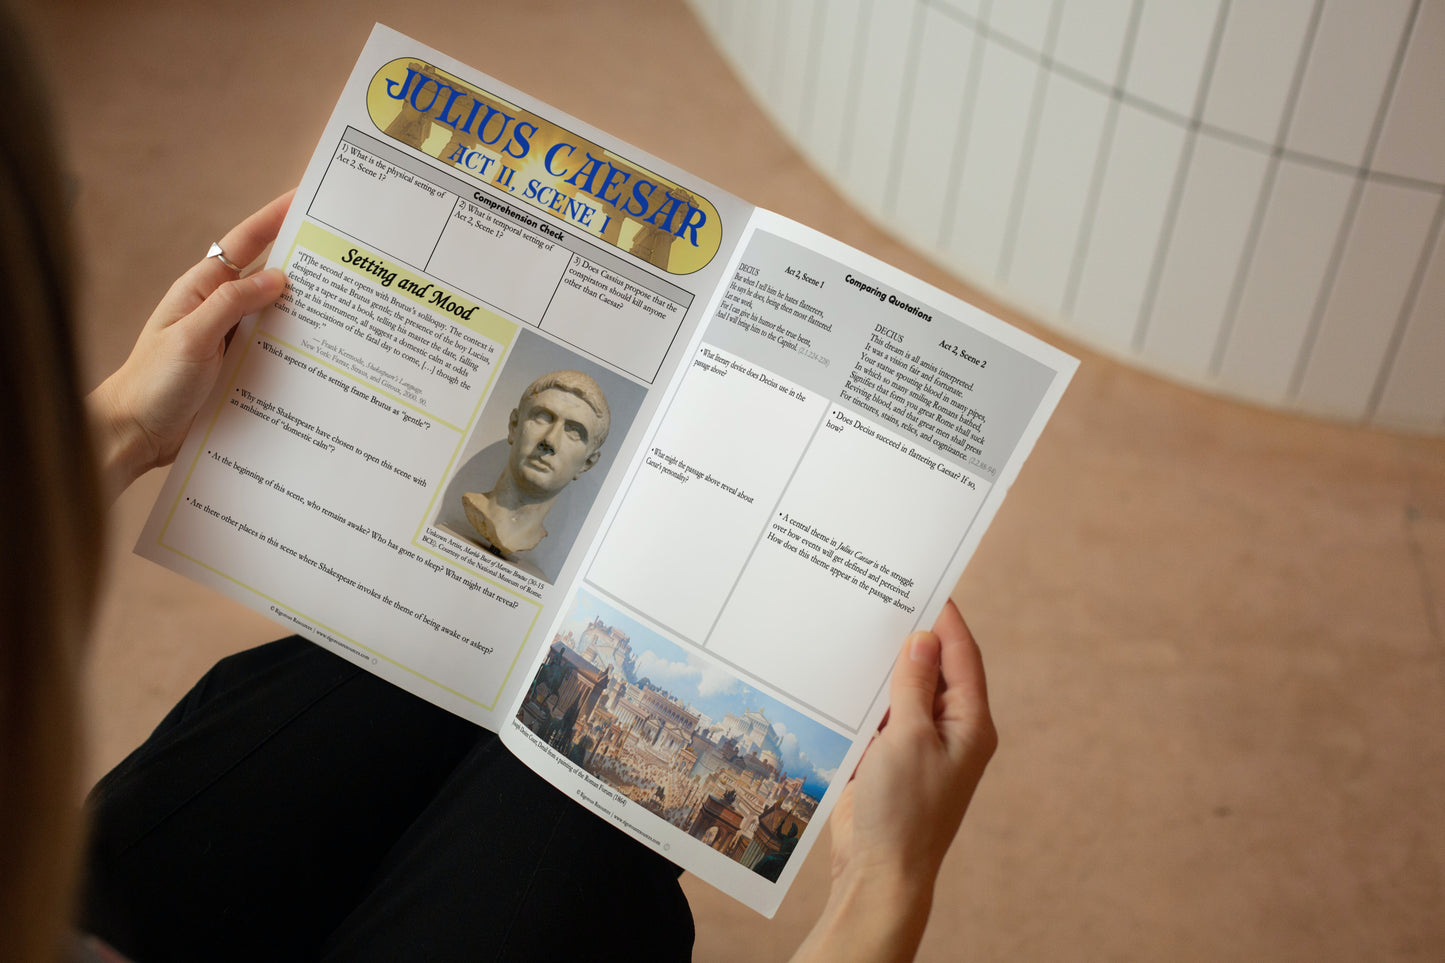 Julius Caesar | Complete Teaching Unit with Workbook & Answer Key